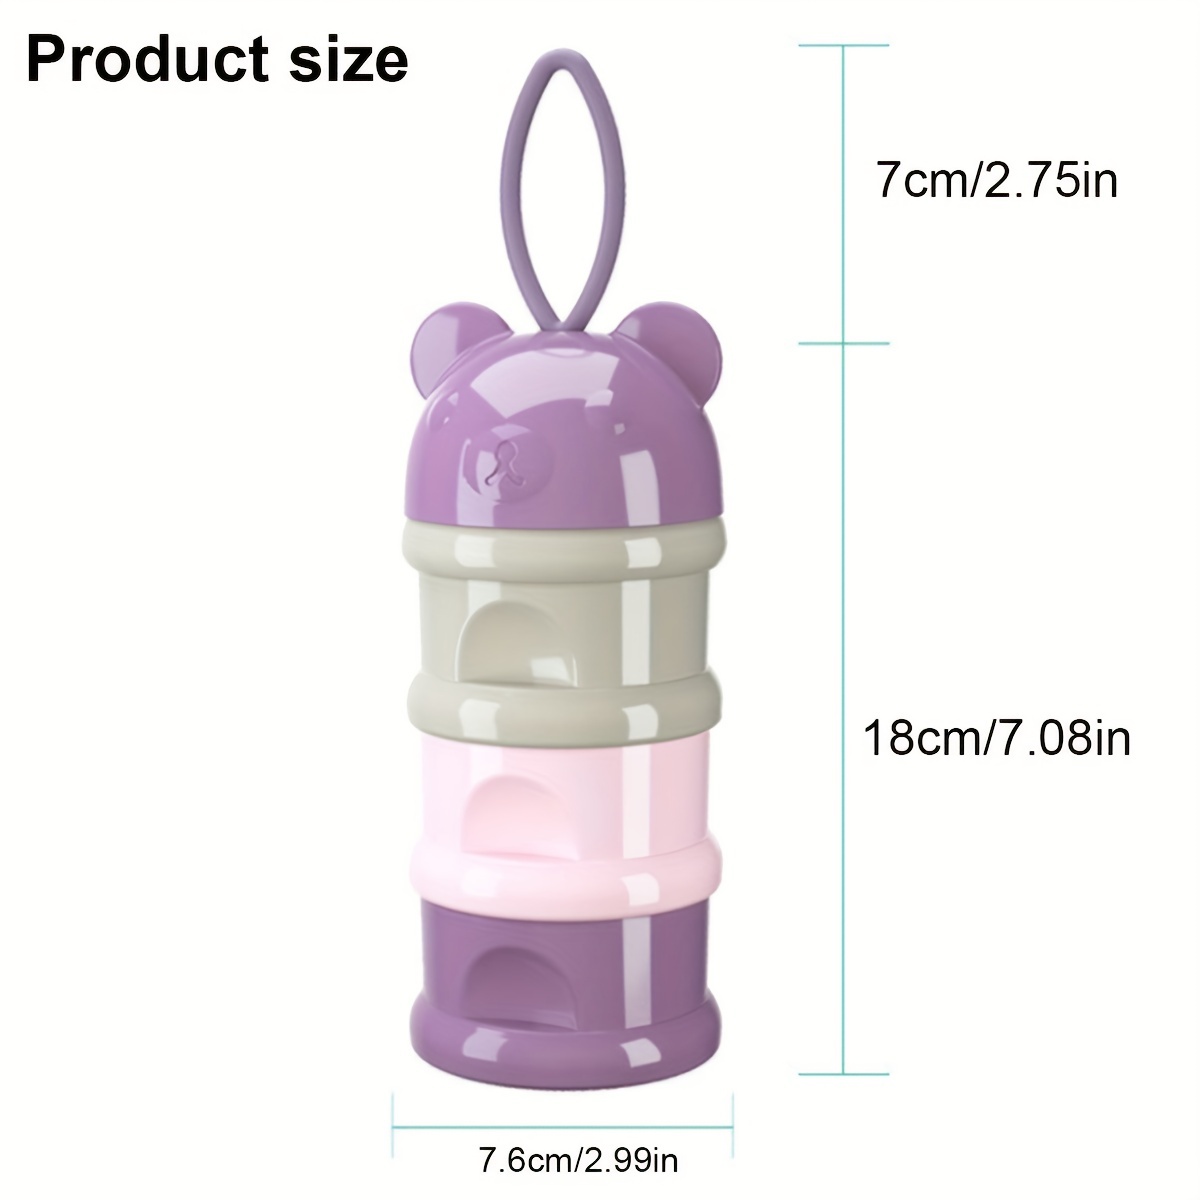 Little Bear Milk Powder Box, Purple Four-layer Portable Milk